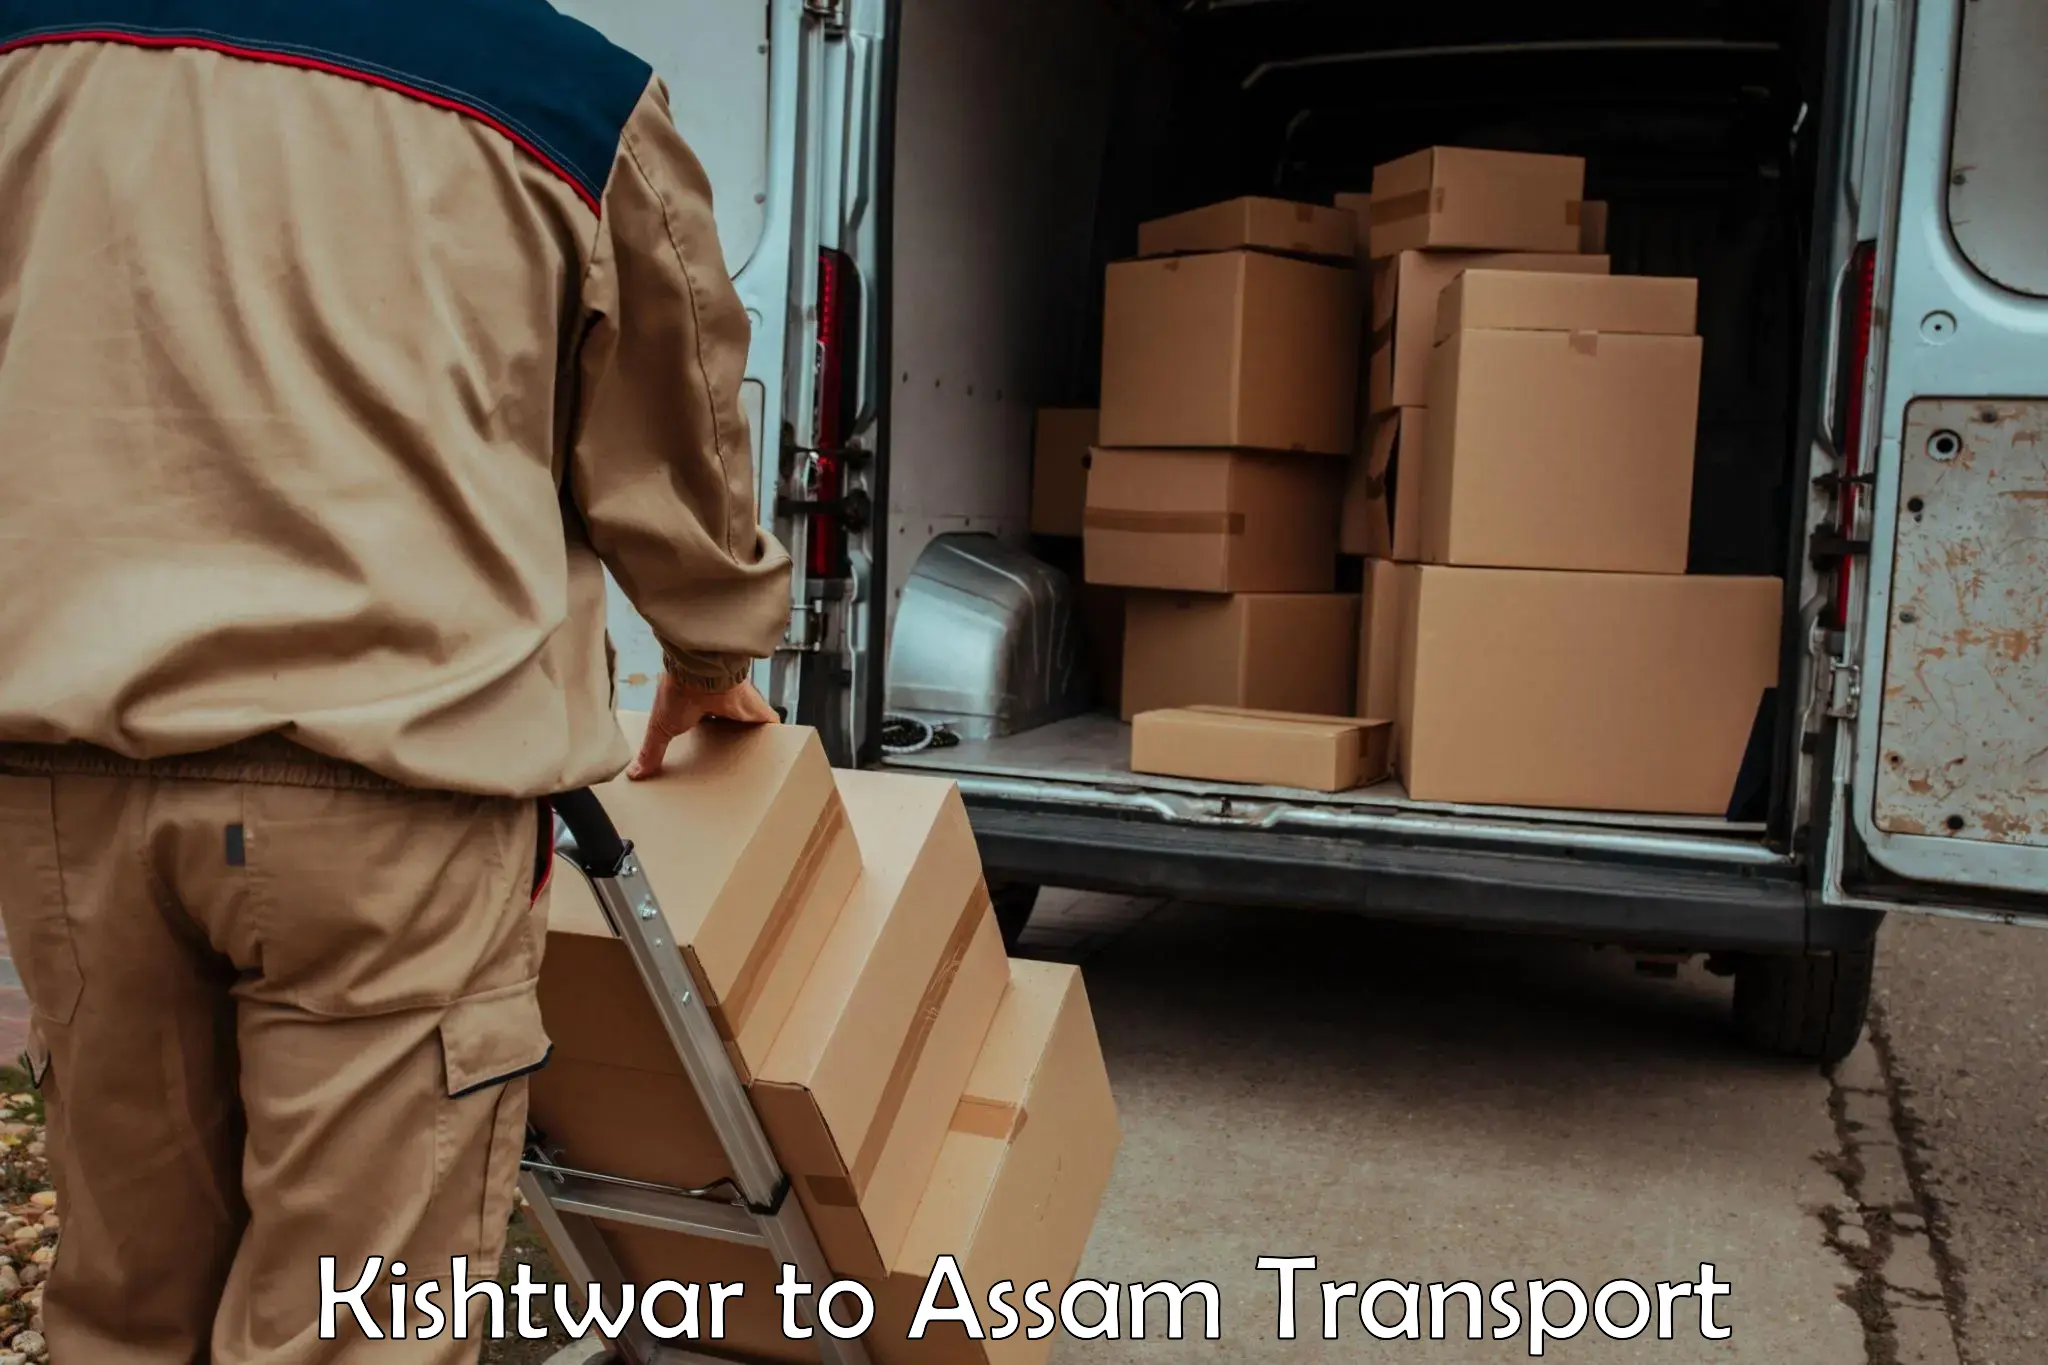 Pick up transport service in Kishtwar to Doom Dooma